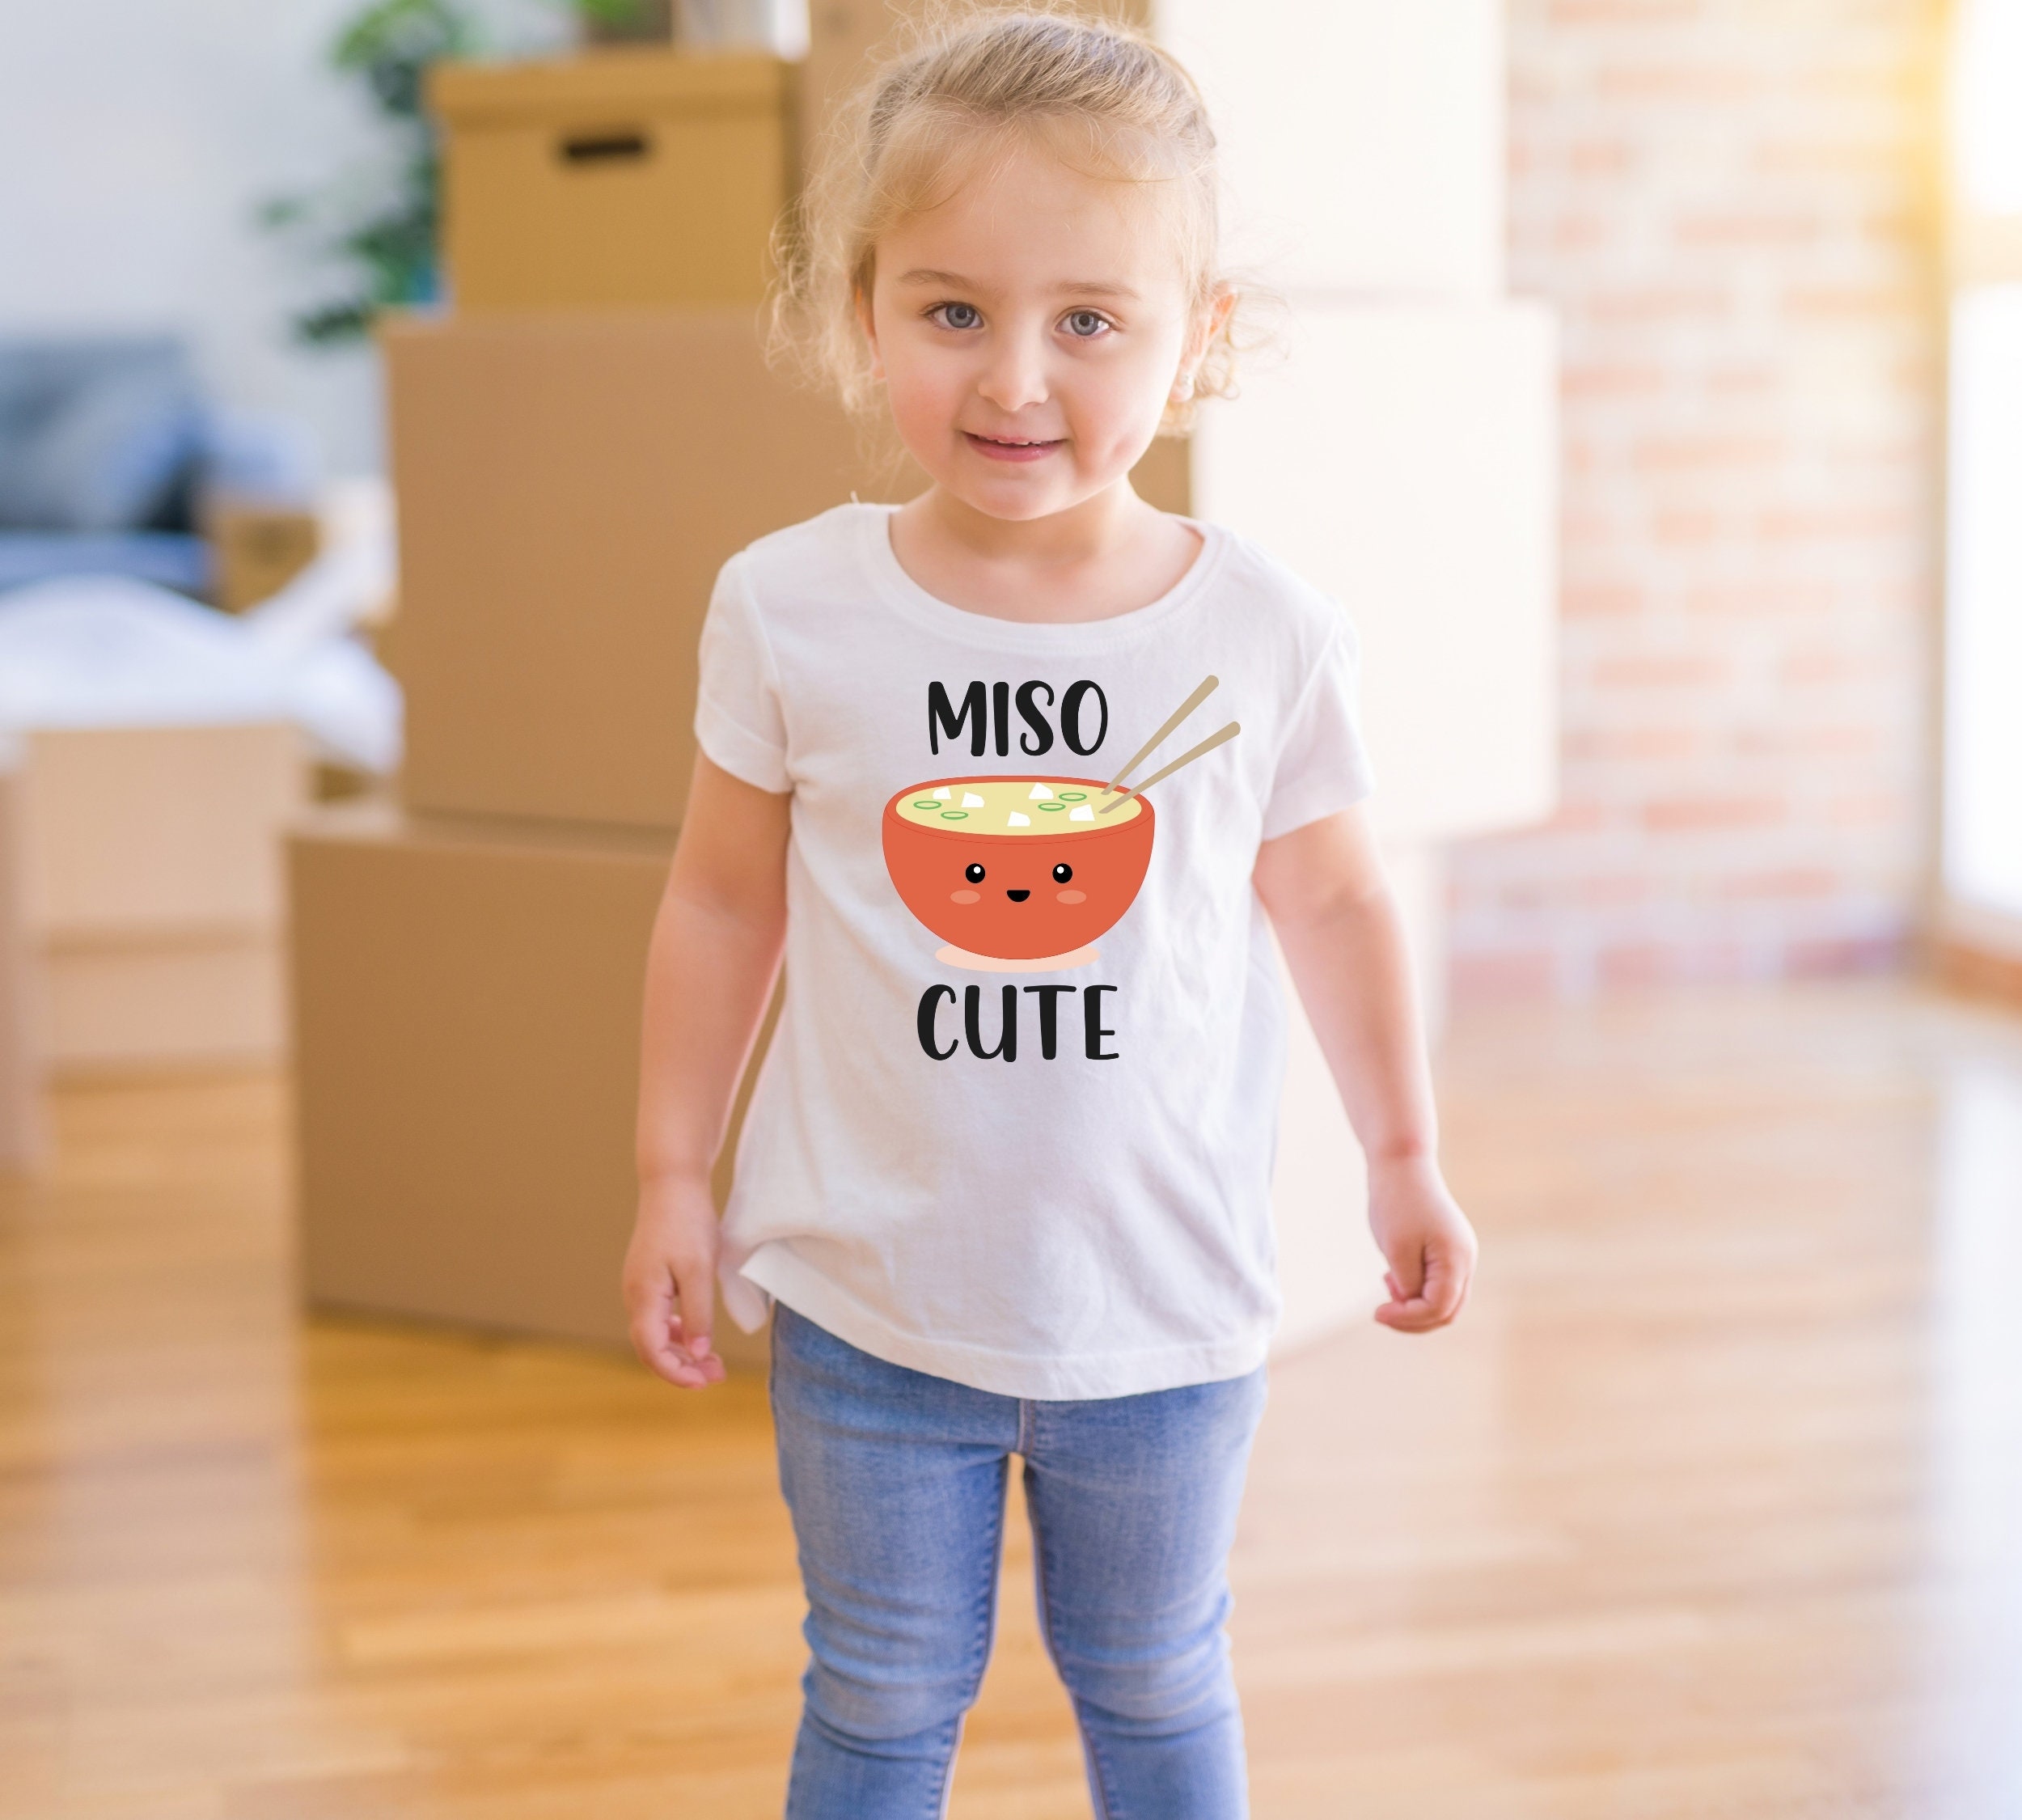 Miso Cute Onesie® Baby Gift Cute Baby Clothes Miso Cute | Etsy